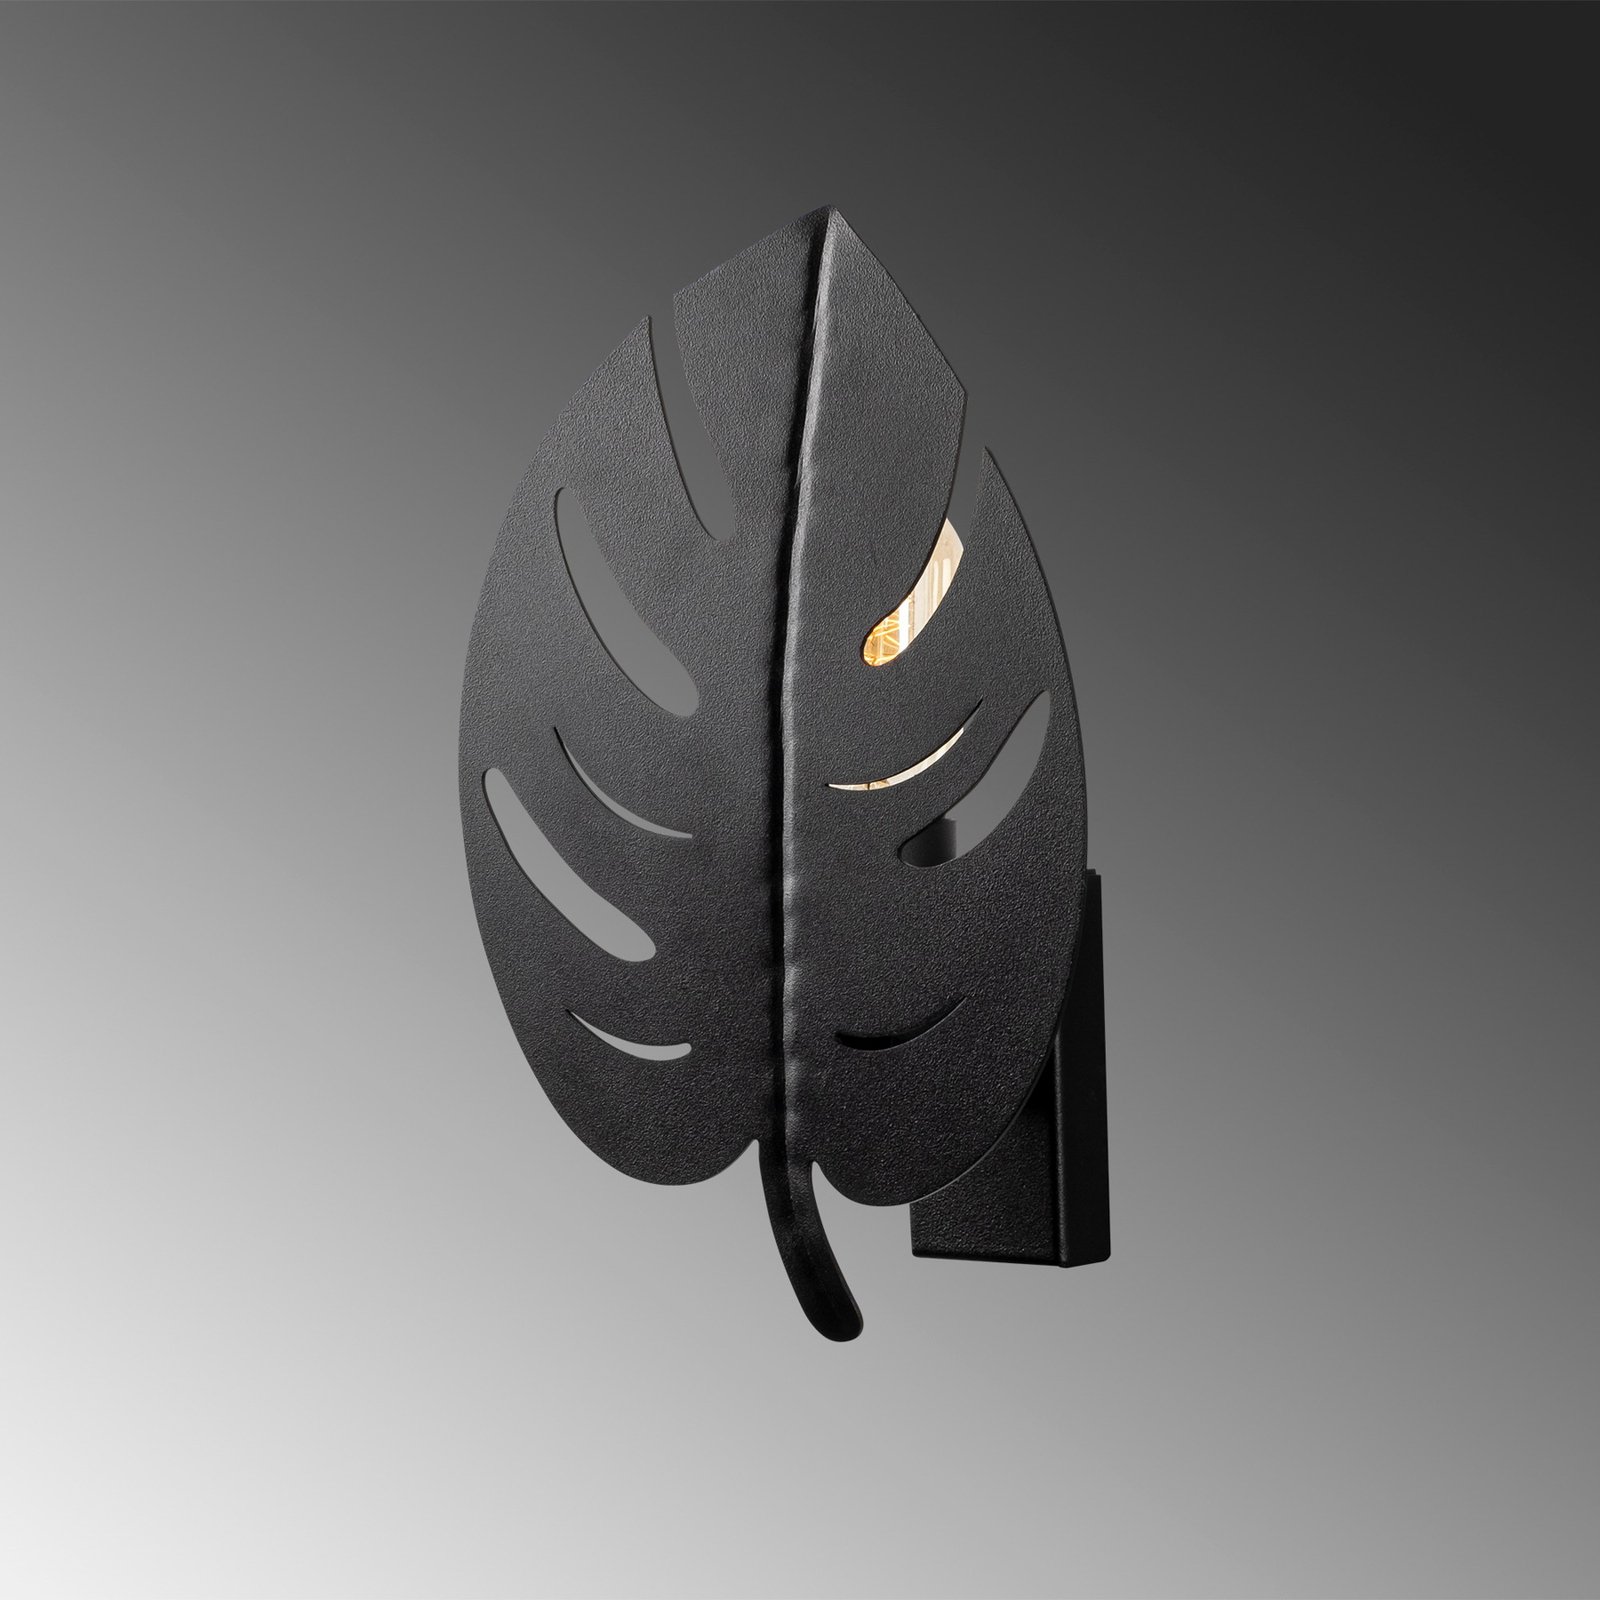 Sivani MR-843 wall light, leaf design, black